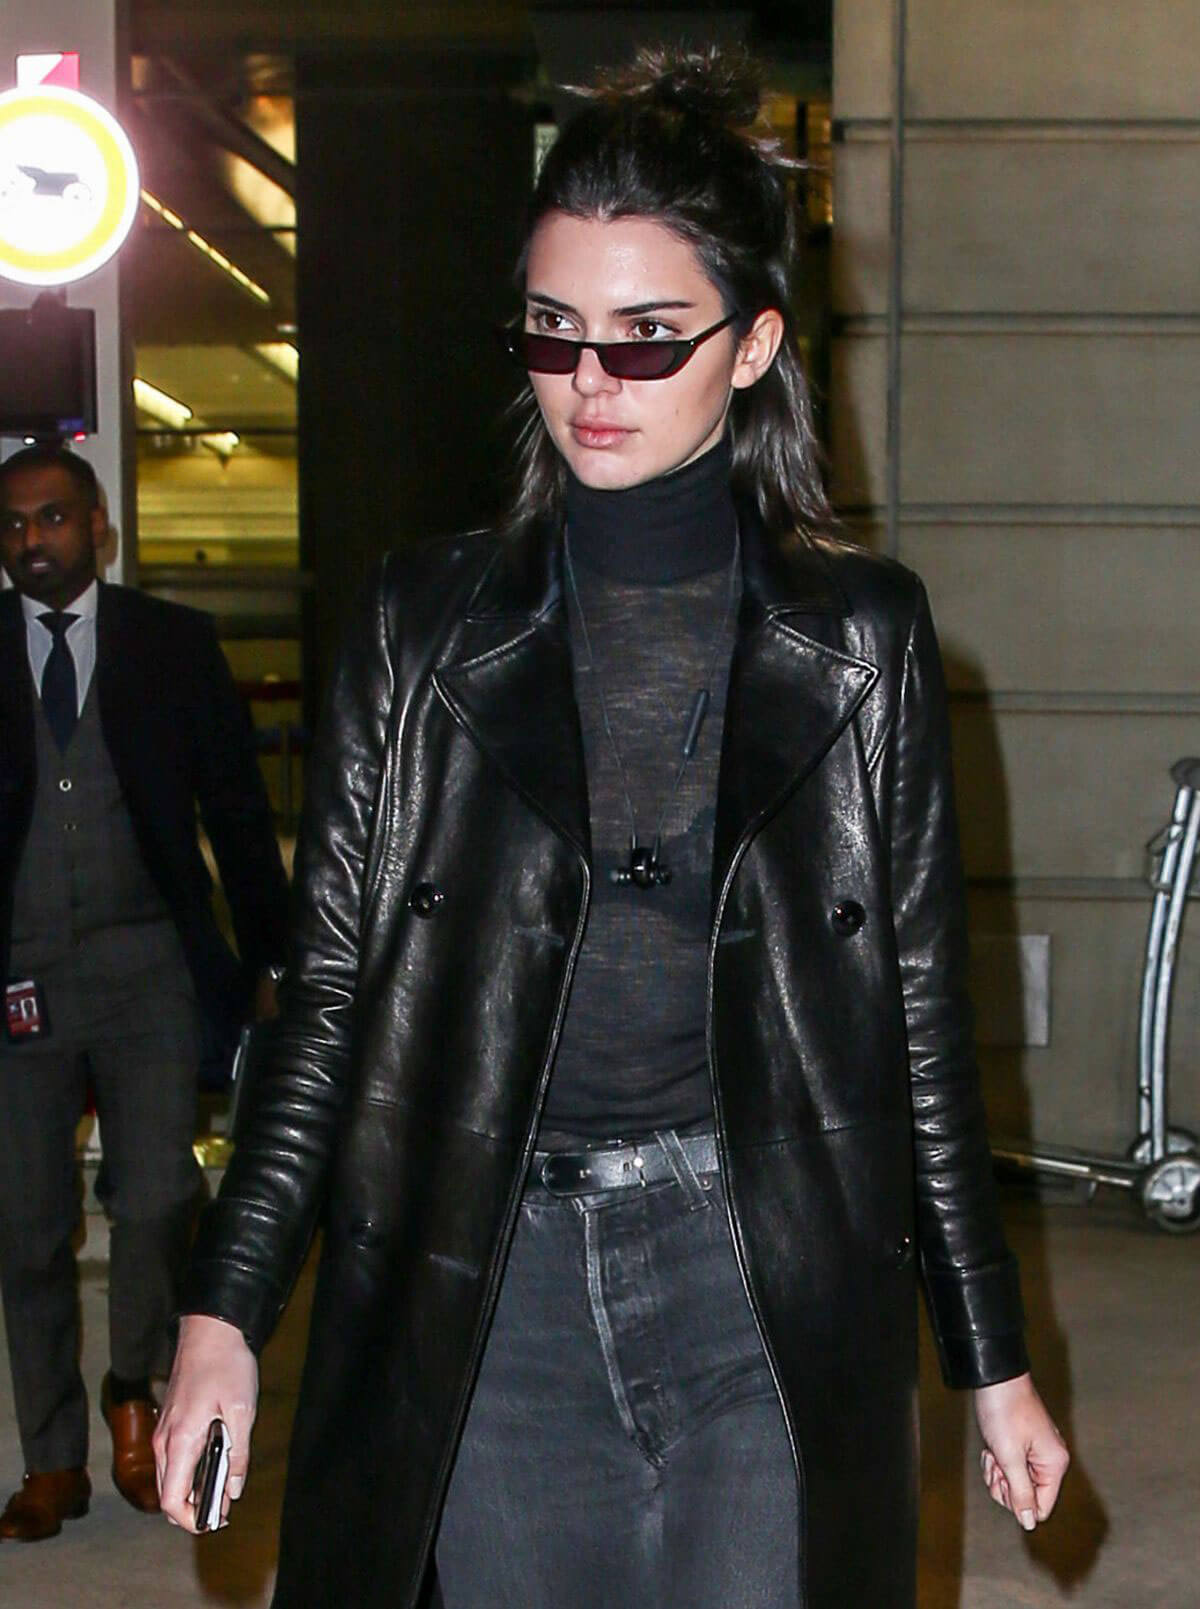 Kendall Jenner Stills at CDG Airport in Paris